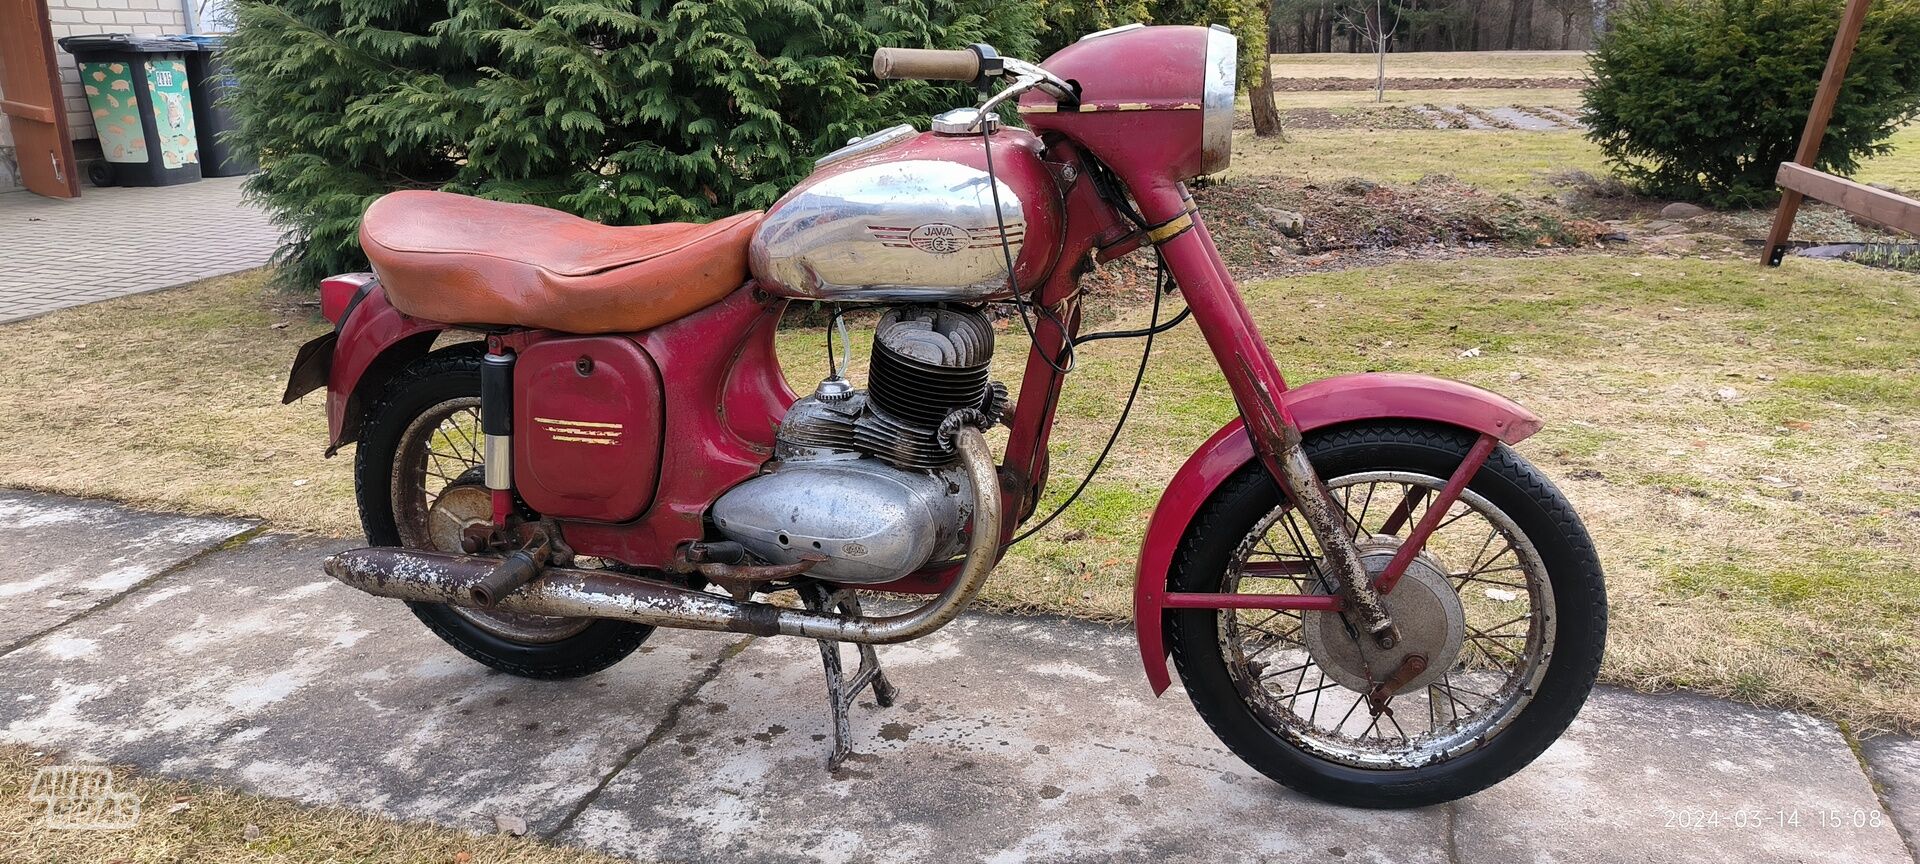 Jawa 250 typ 353 1959 y Classical / Streetbike motorcycle